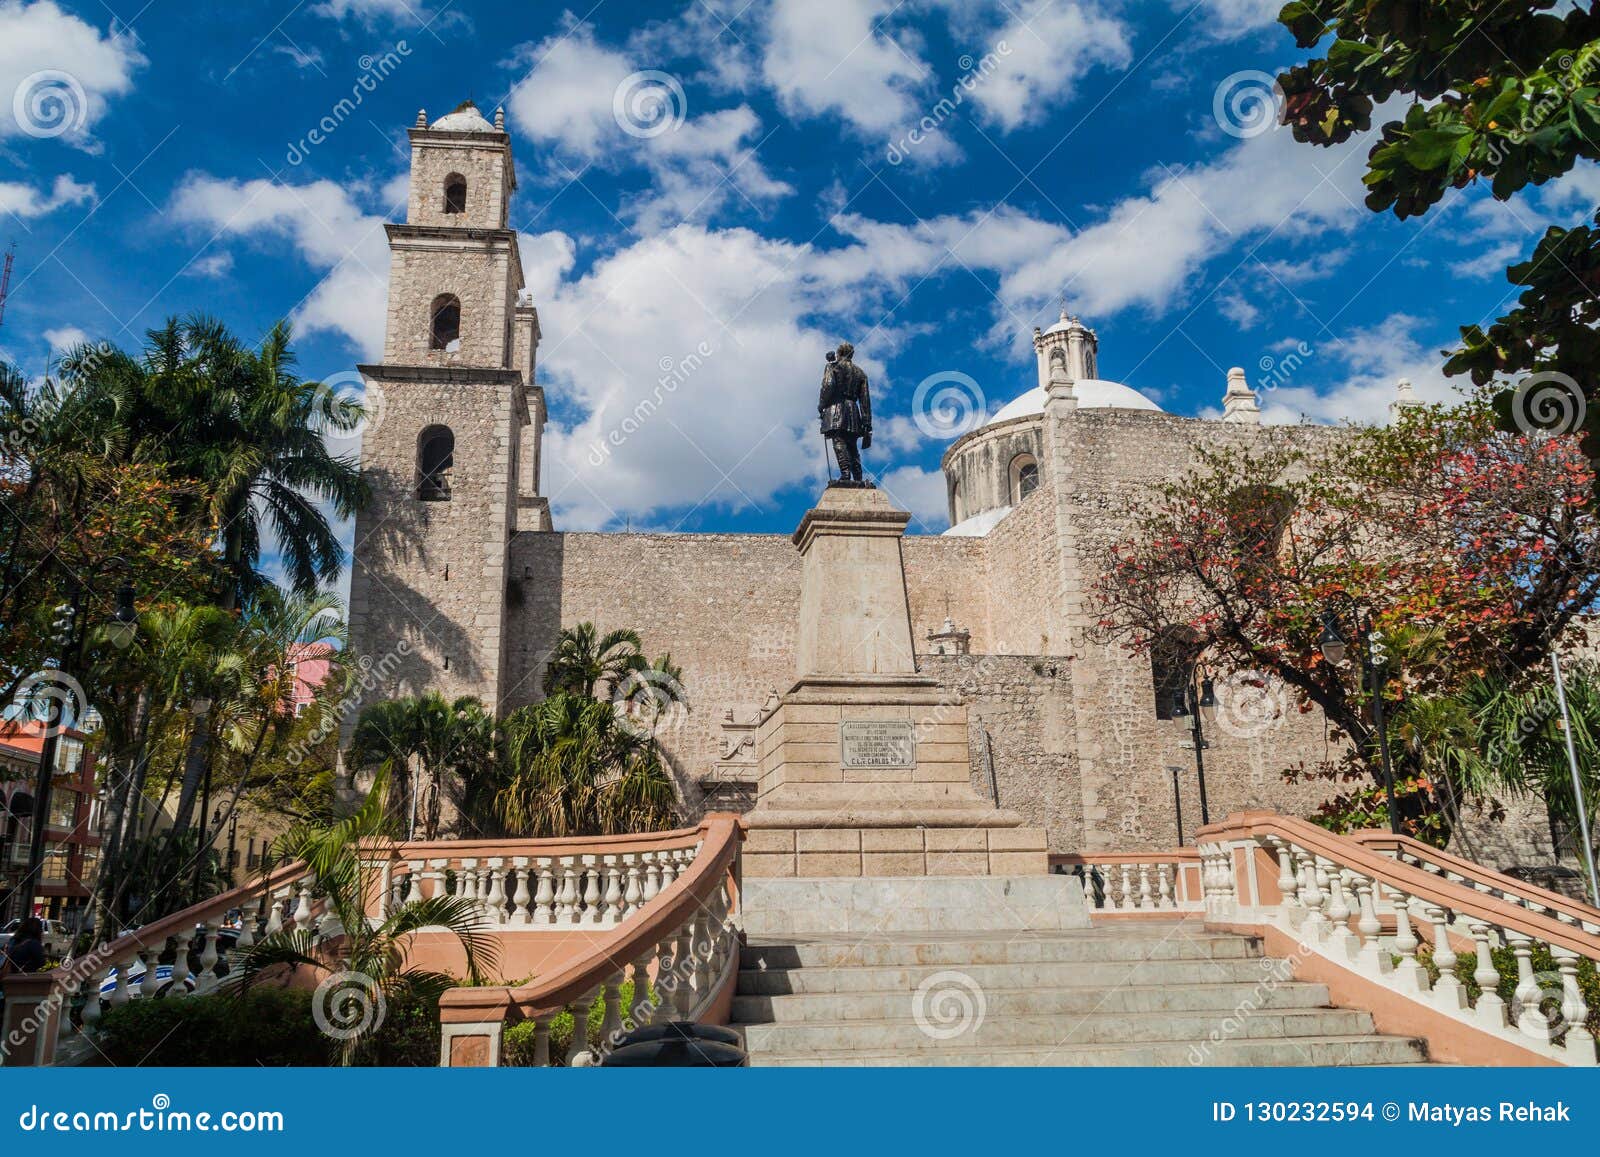 monument to general manuel cepeda peraza and iglesia de jesus church in merida, mexi